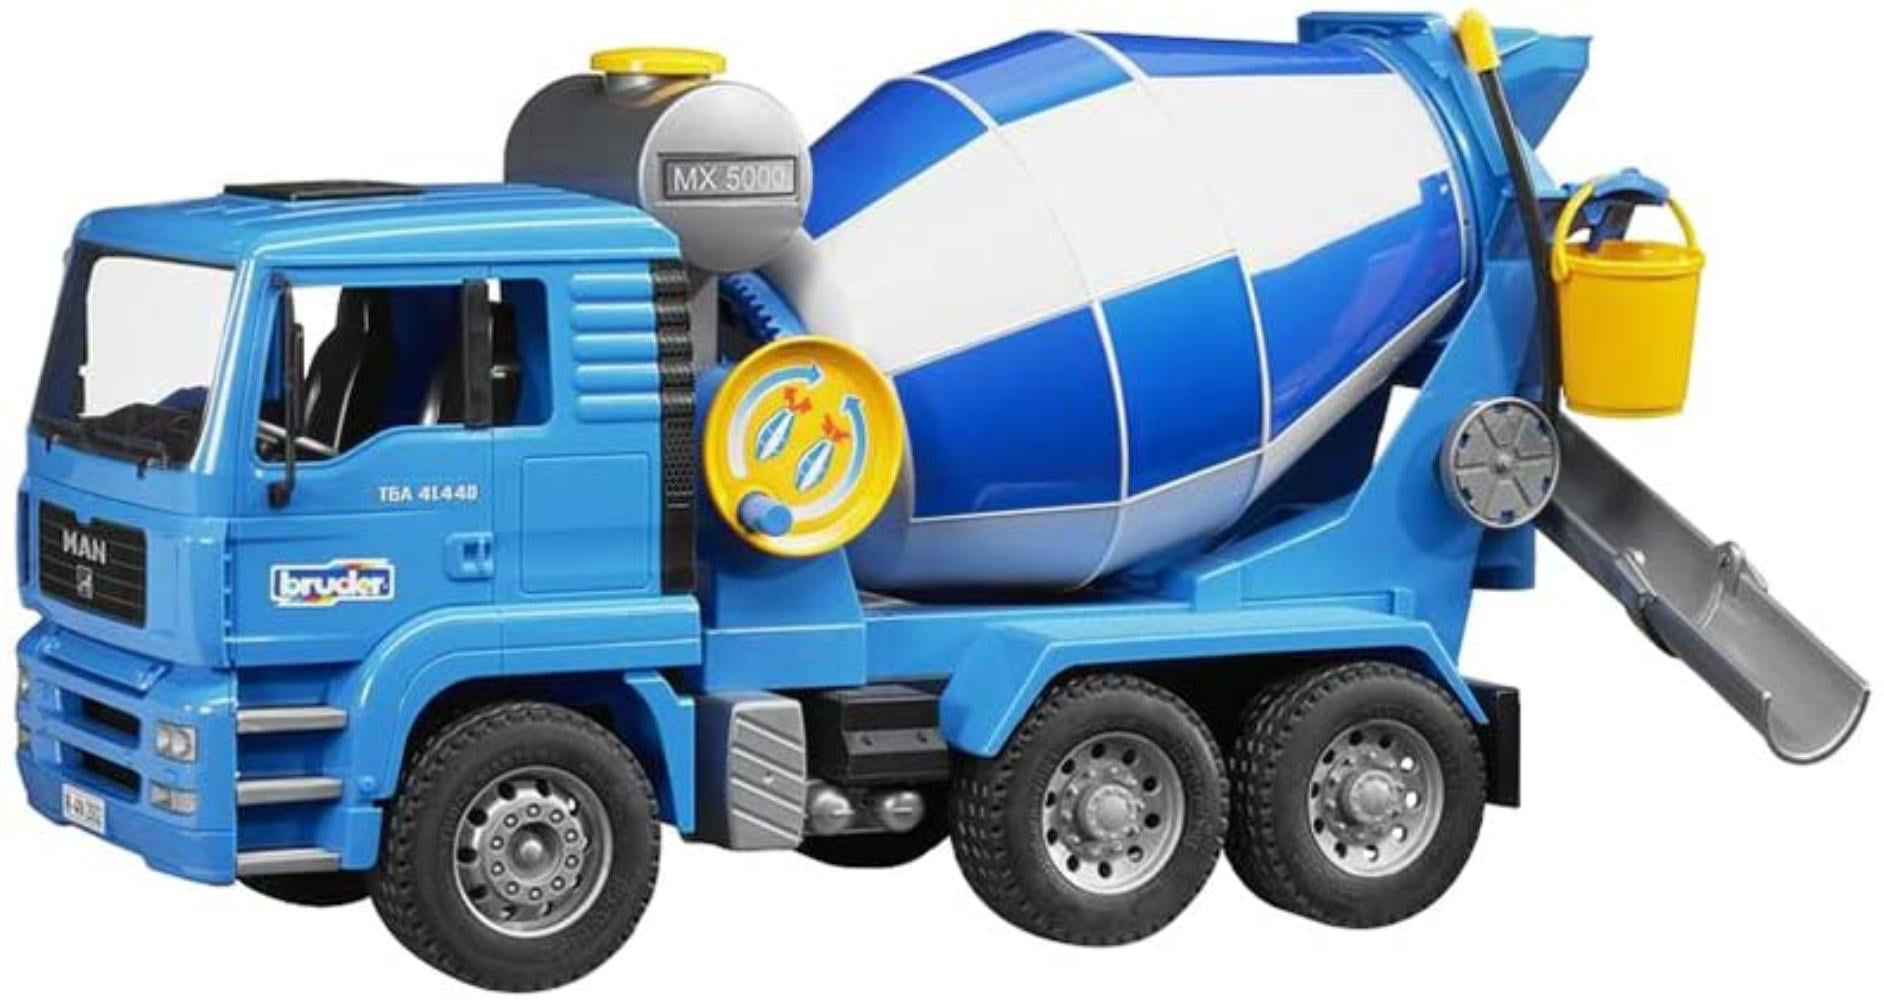 NEW Bruder 02814 Mack Granite Cement Mixer Truck Toy Construction Vehicle 